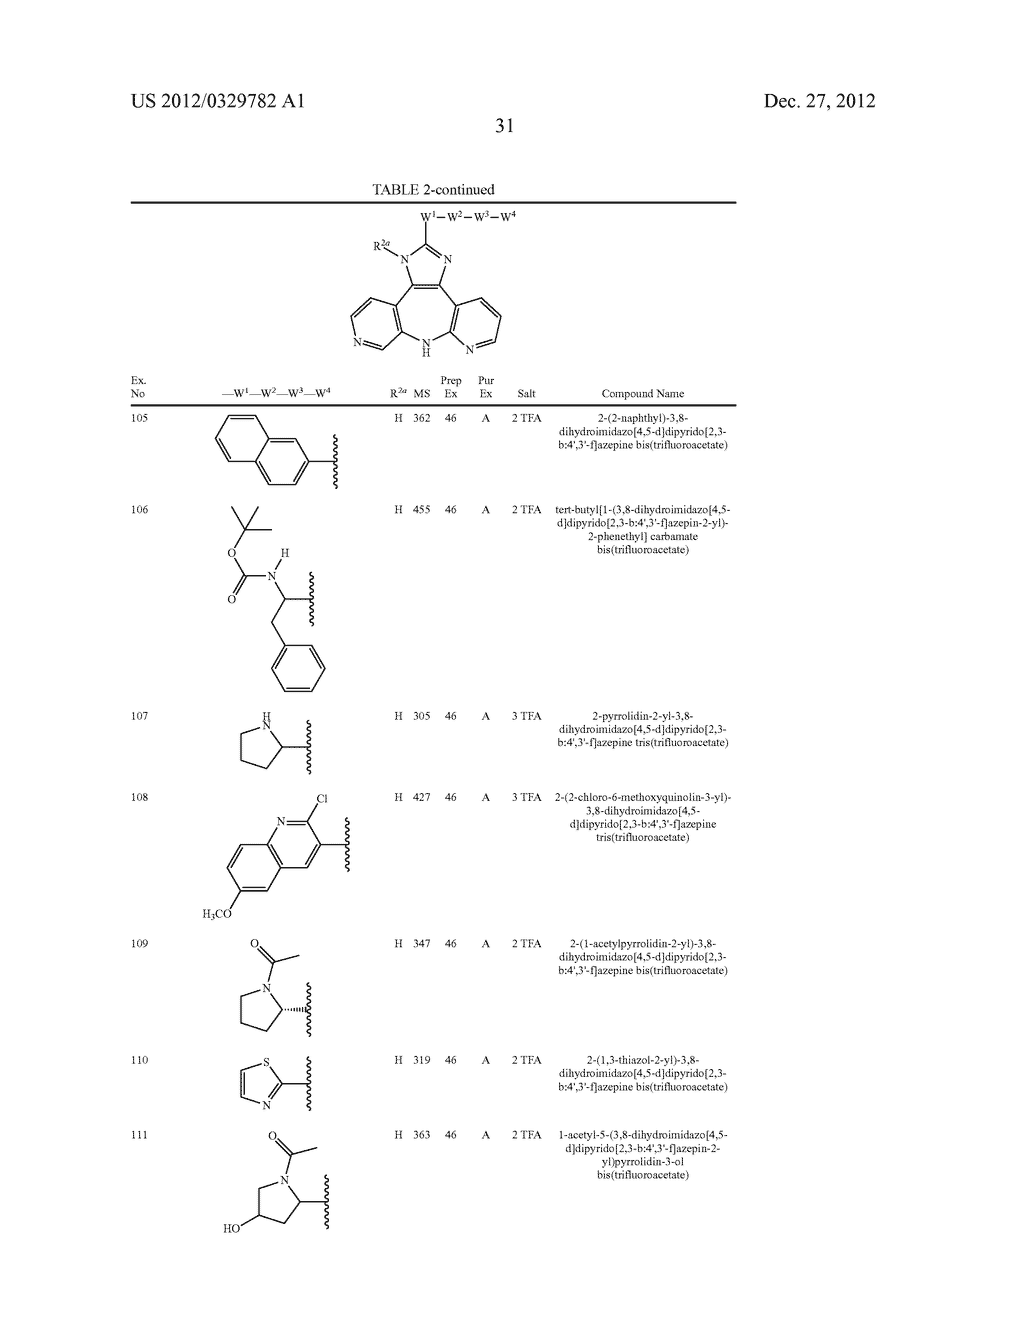 AZEPINE INHIBITORS OF JANUS KINASES - diagram, schematic, and image 32